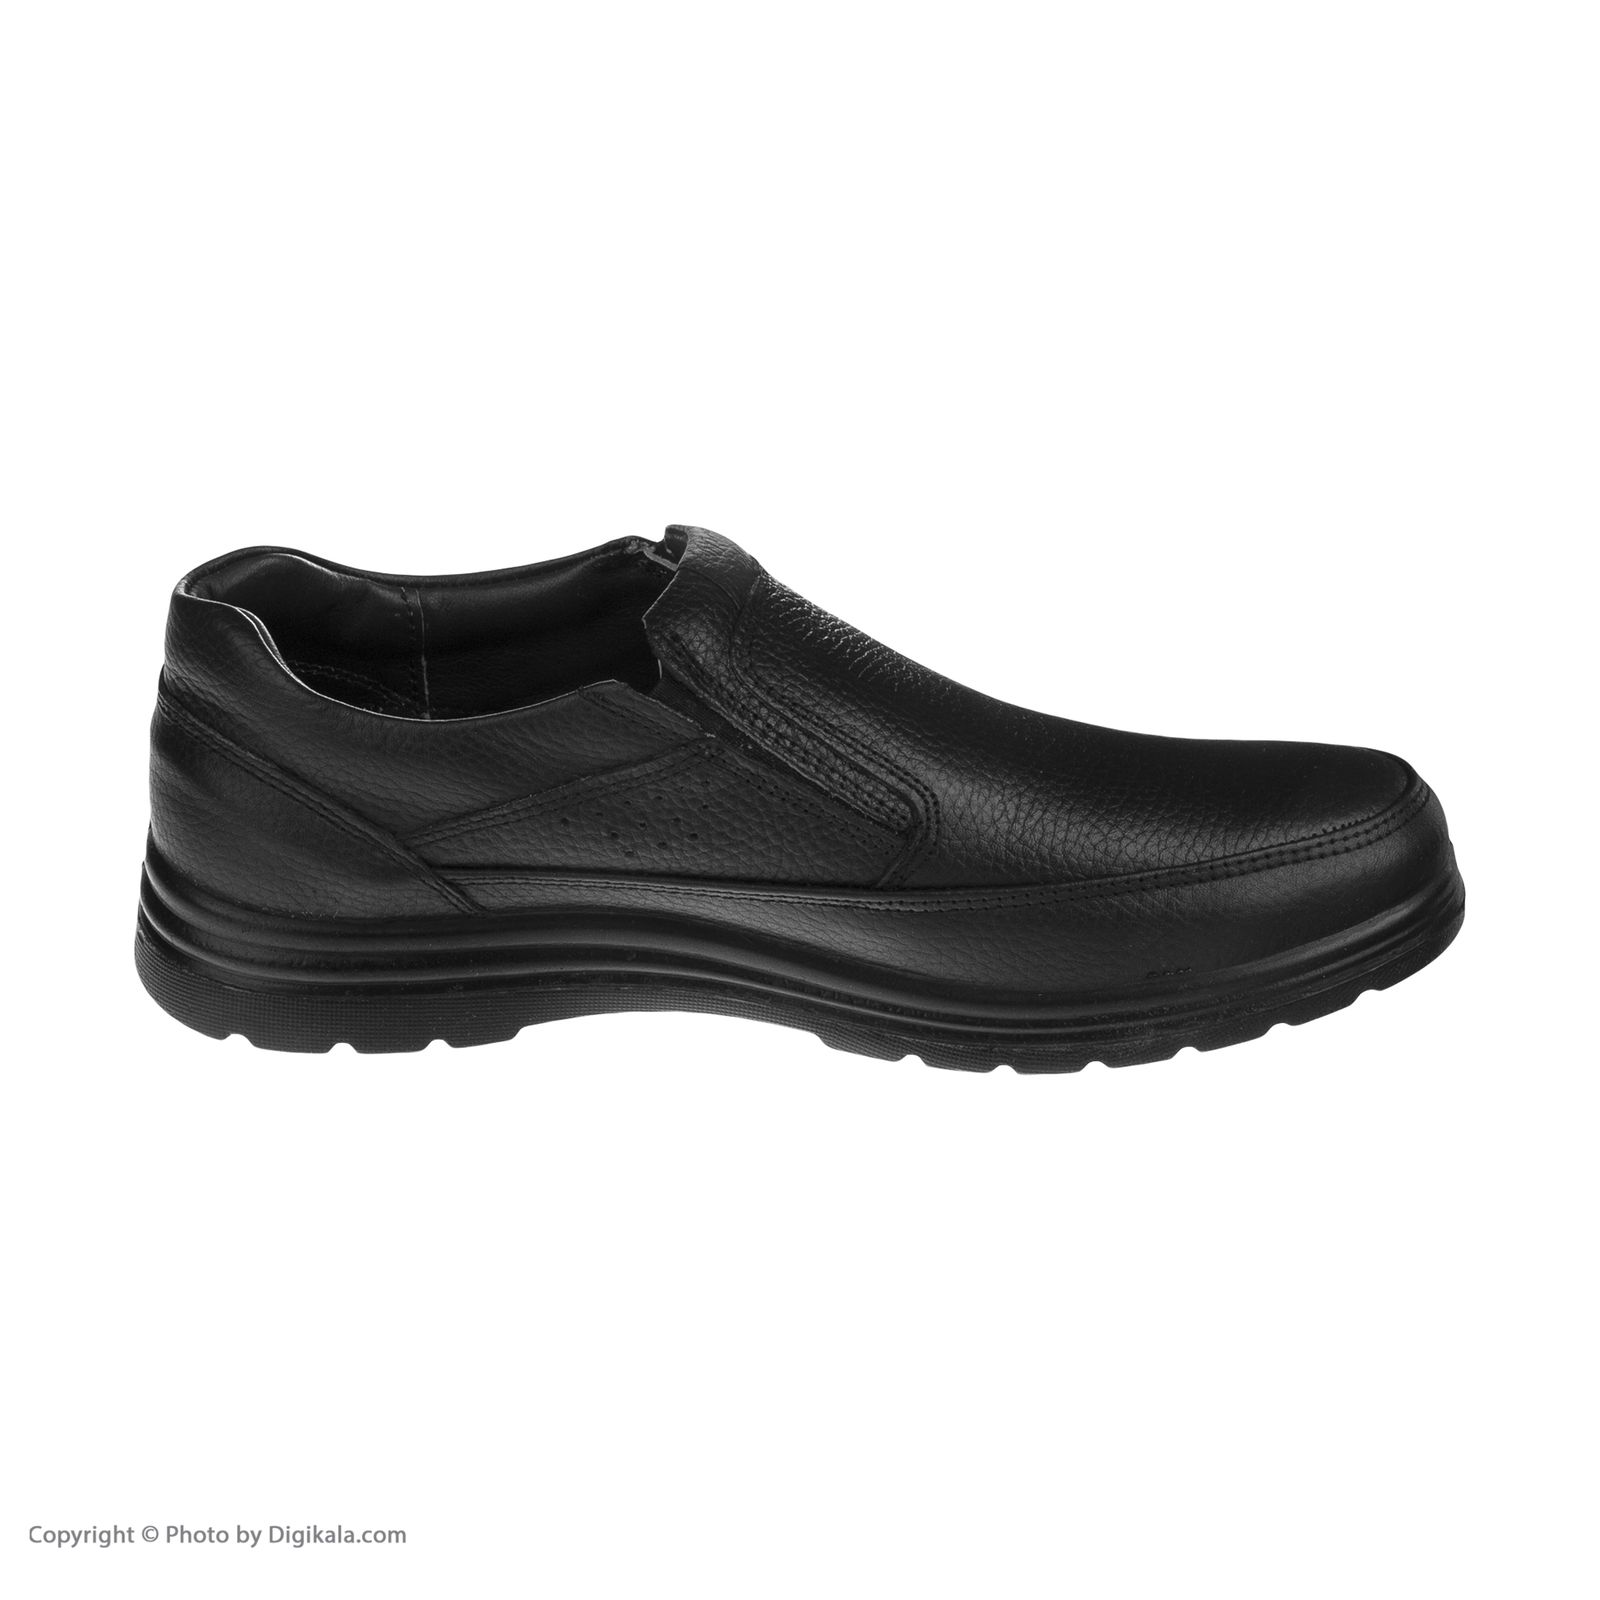 کفش روزمره مردانه شیفر مدل 7237a503101 - مشکی - 5